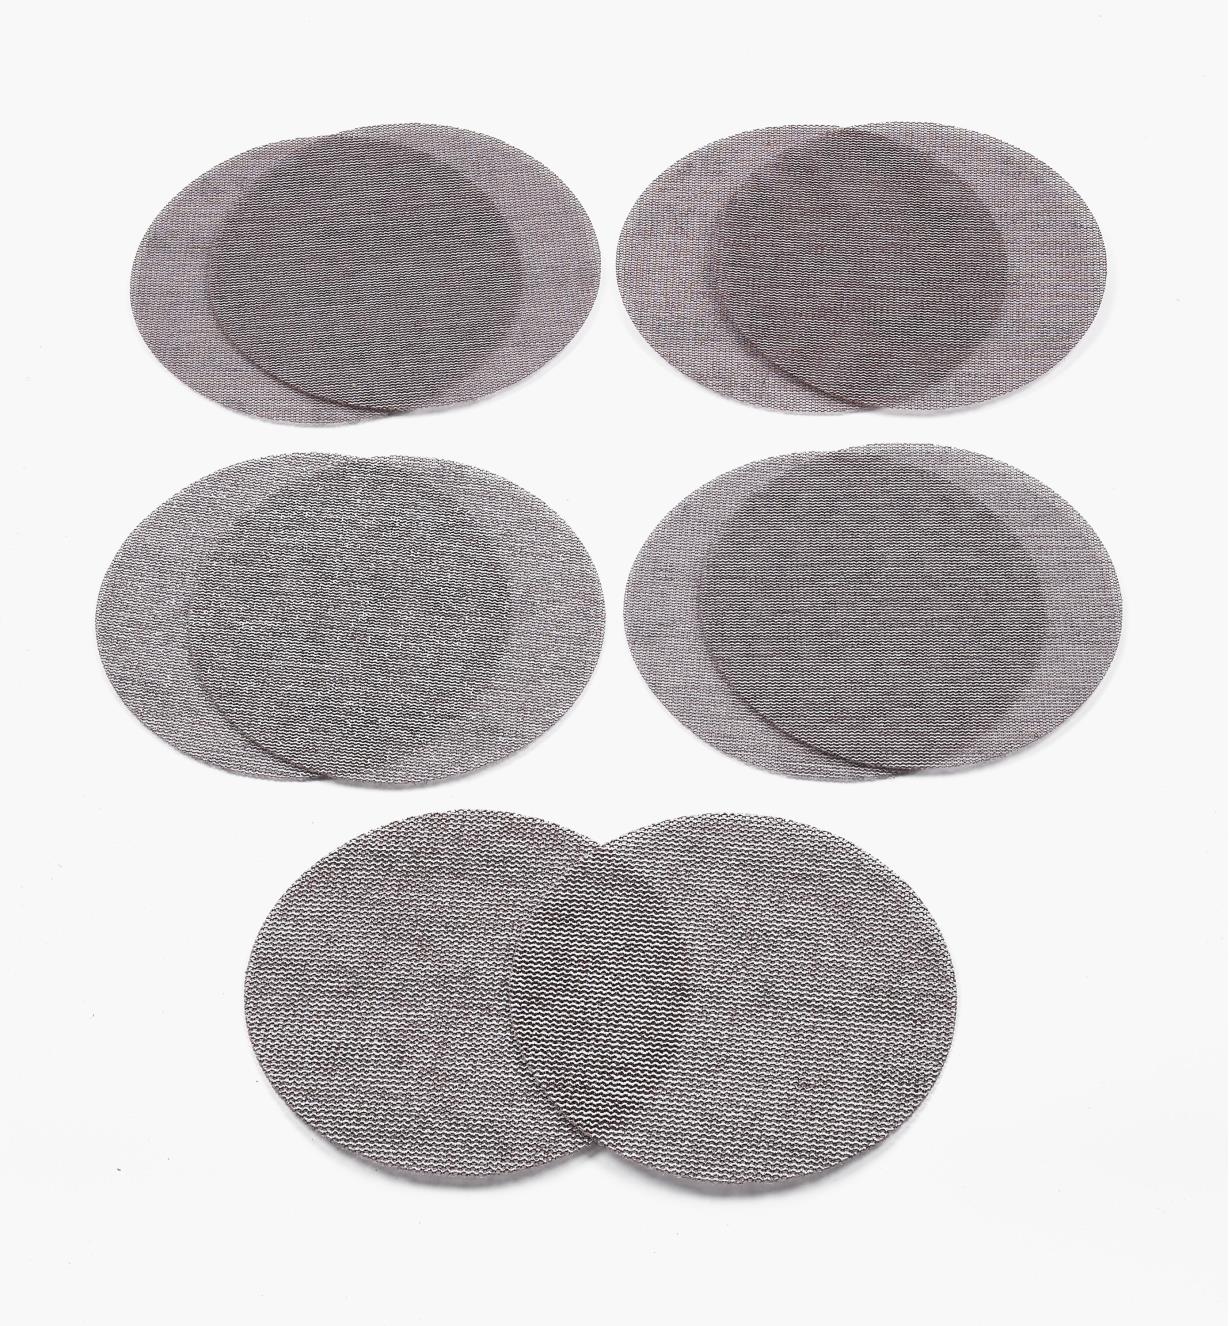 08K1015 - 10-Pc. Sample Pack of Mirka 5" Abranet Grip Discs